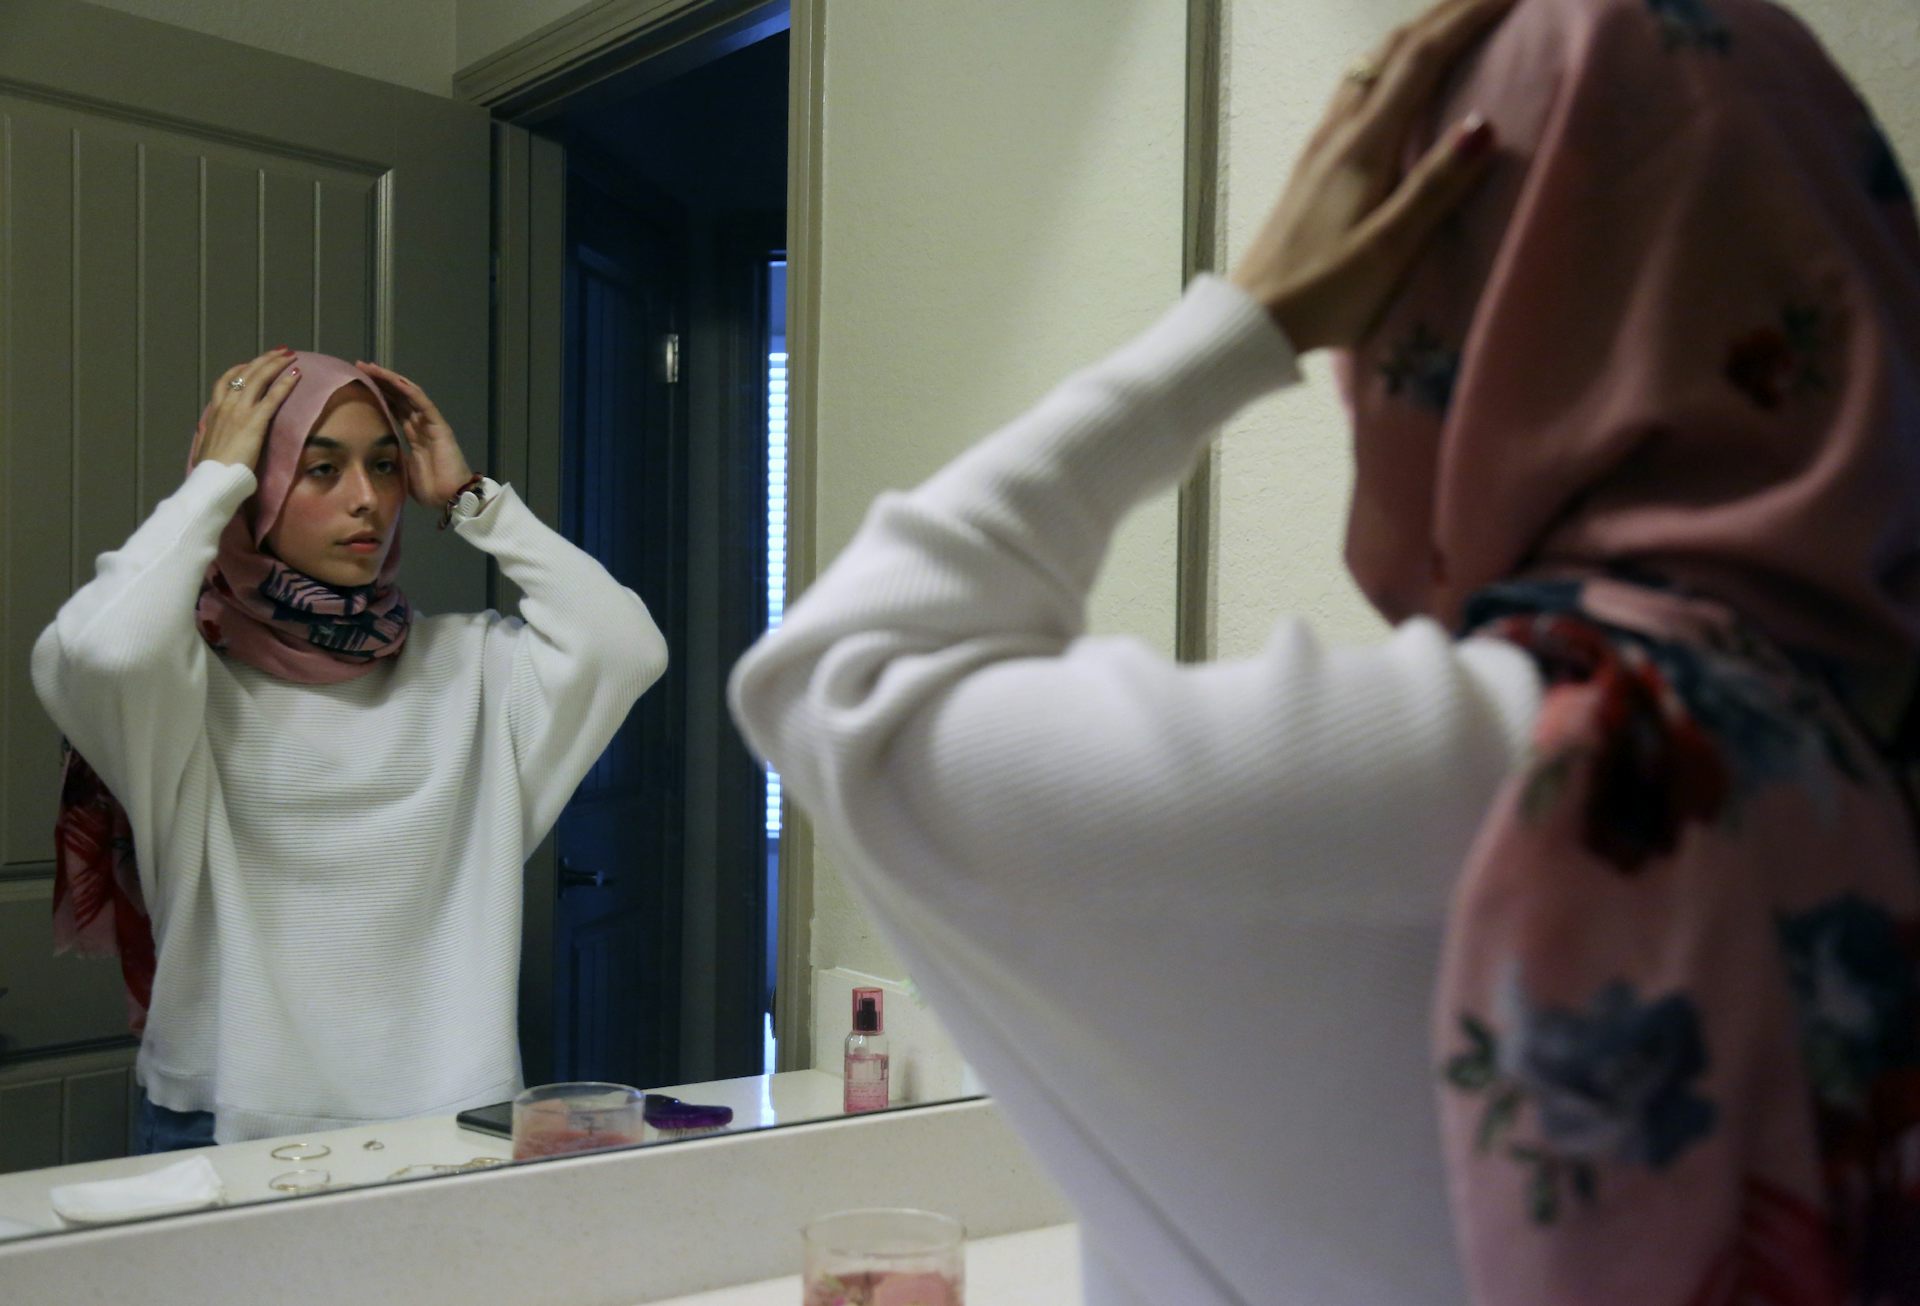 Teenager adjusts her hijab in mirror